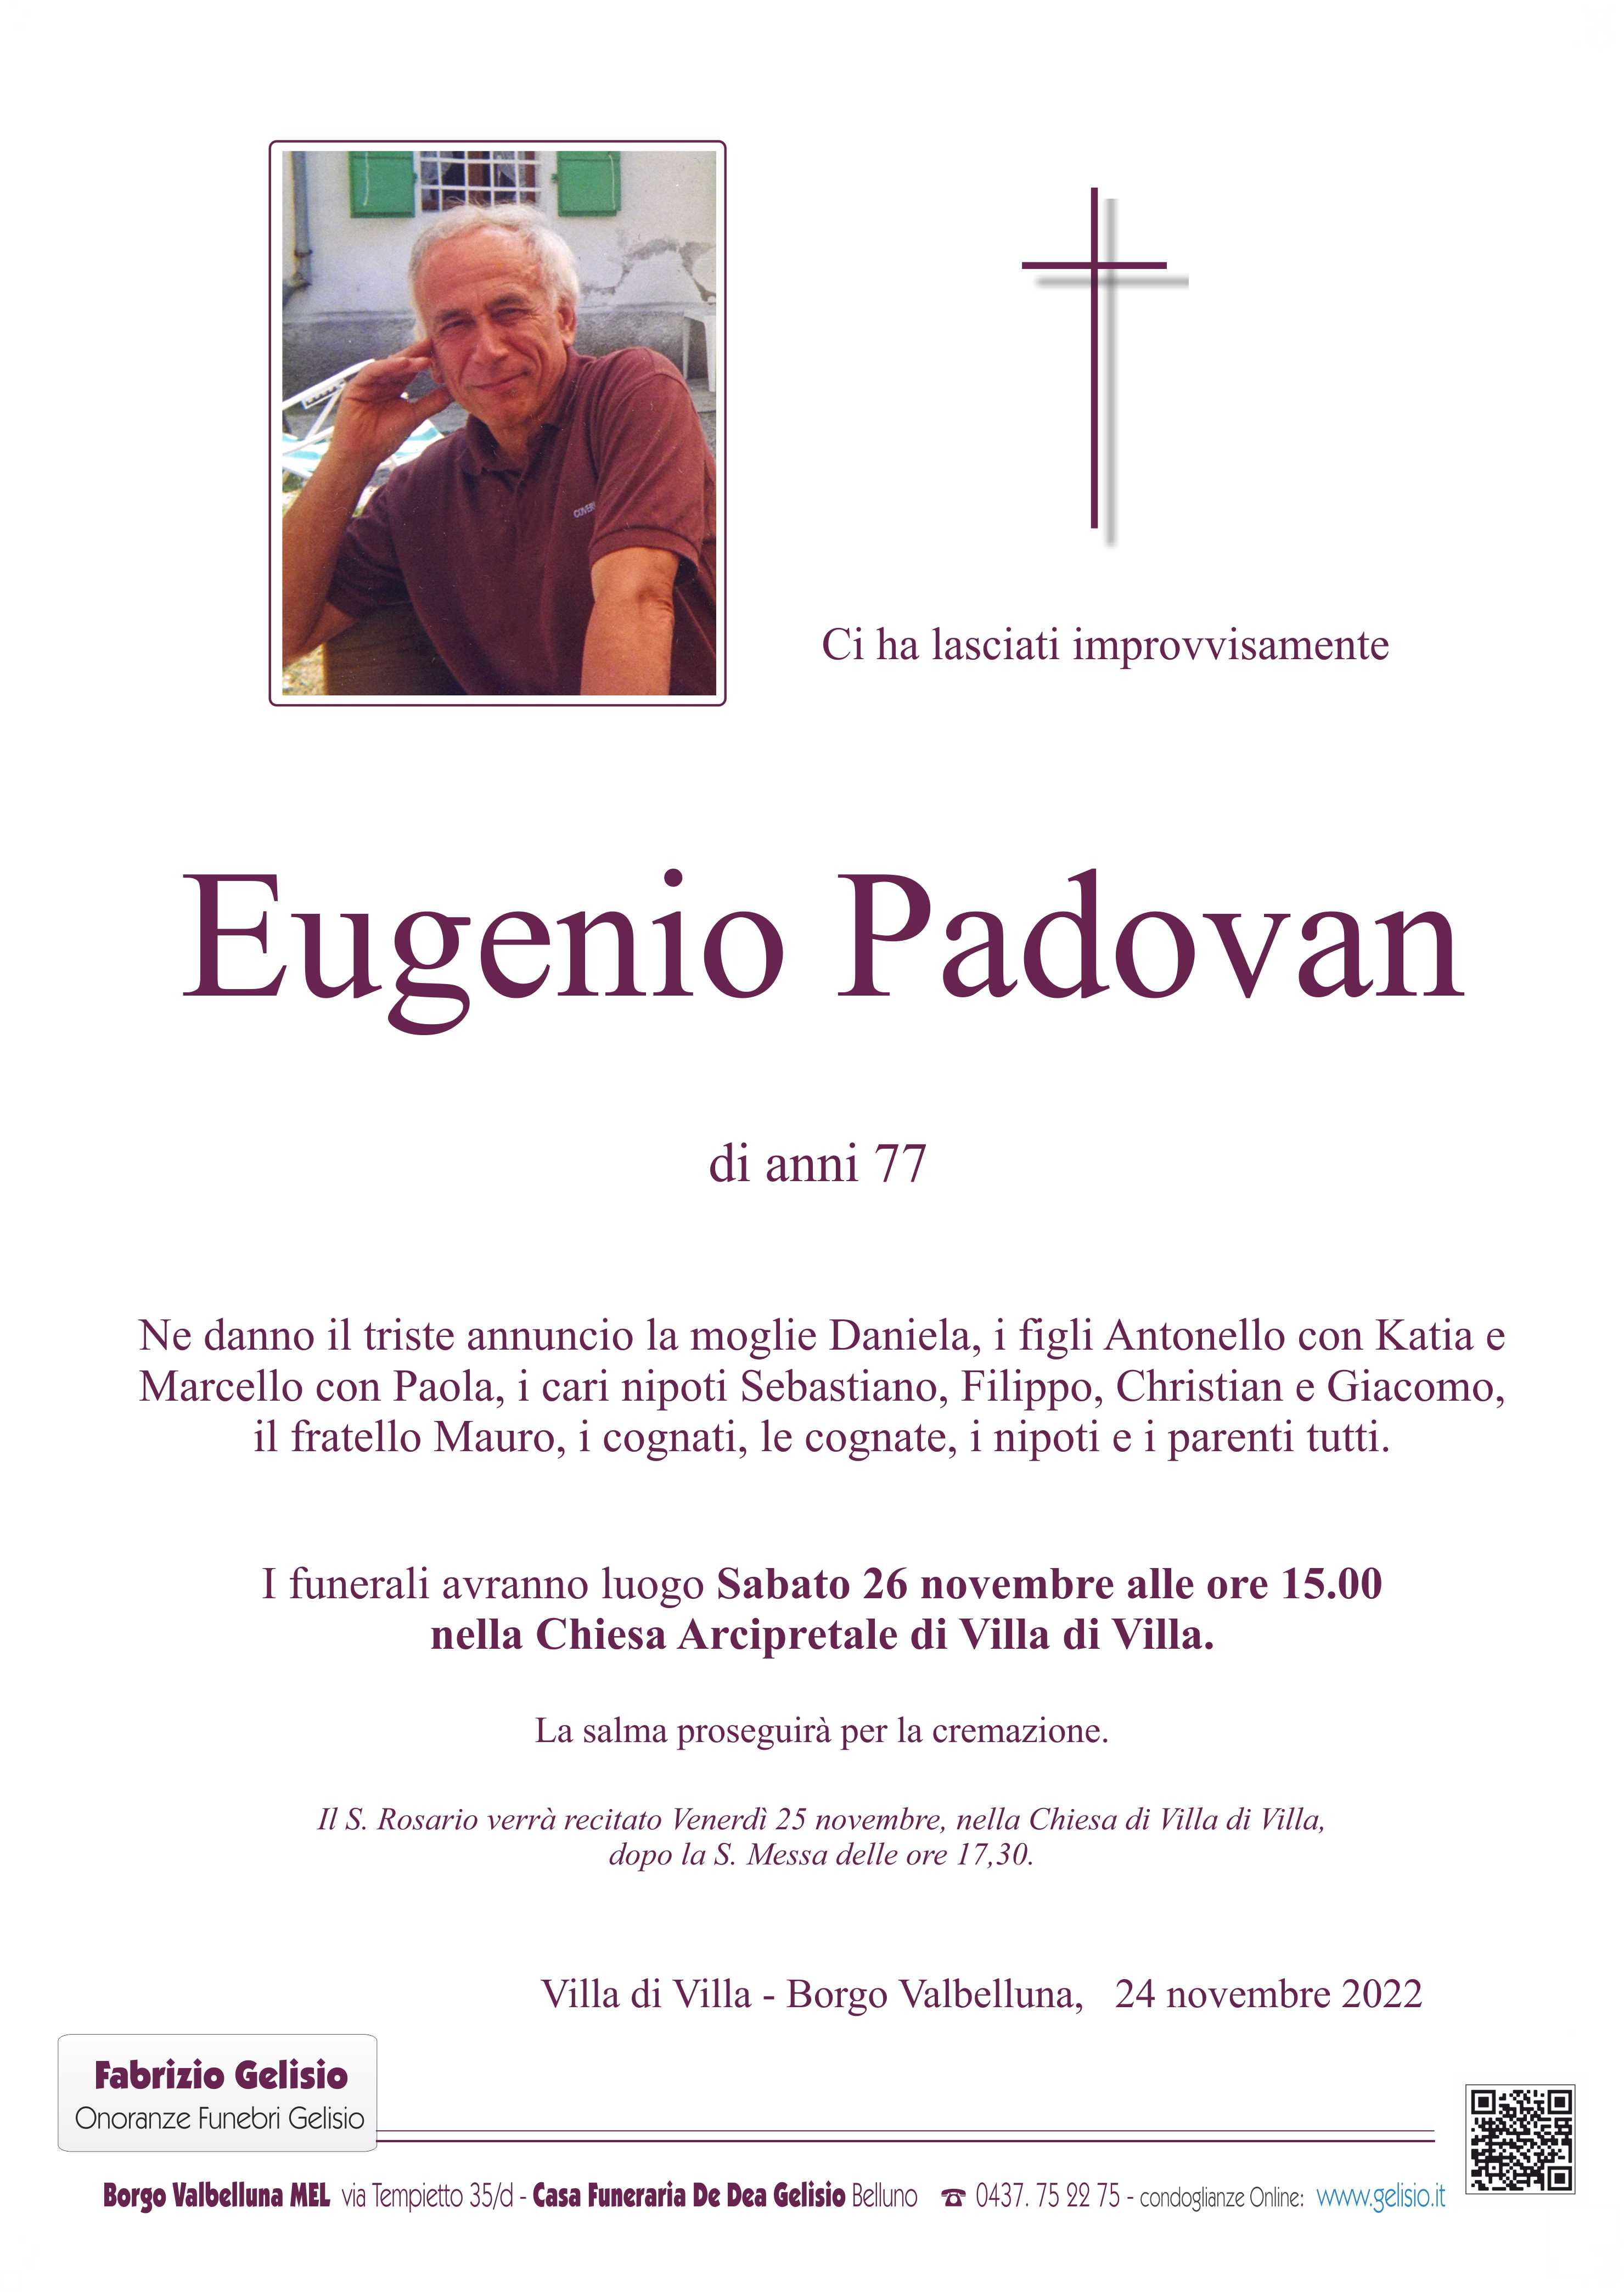 Padovan Eugenio